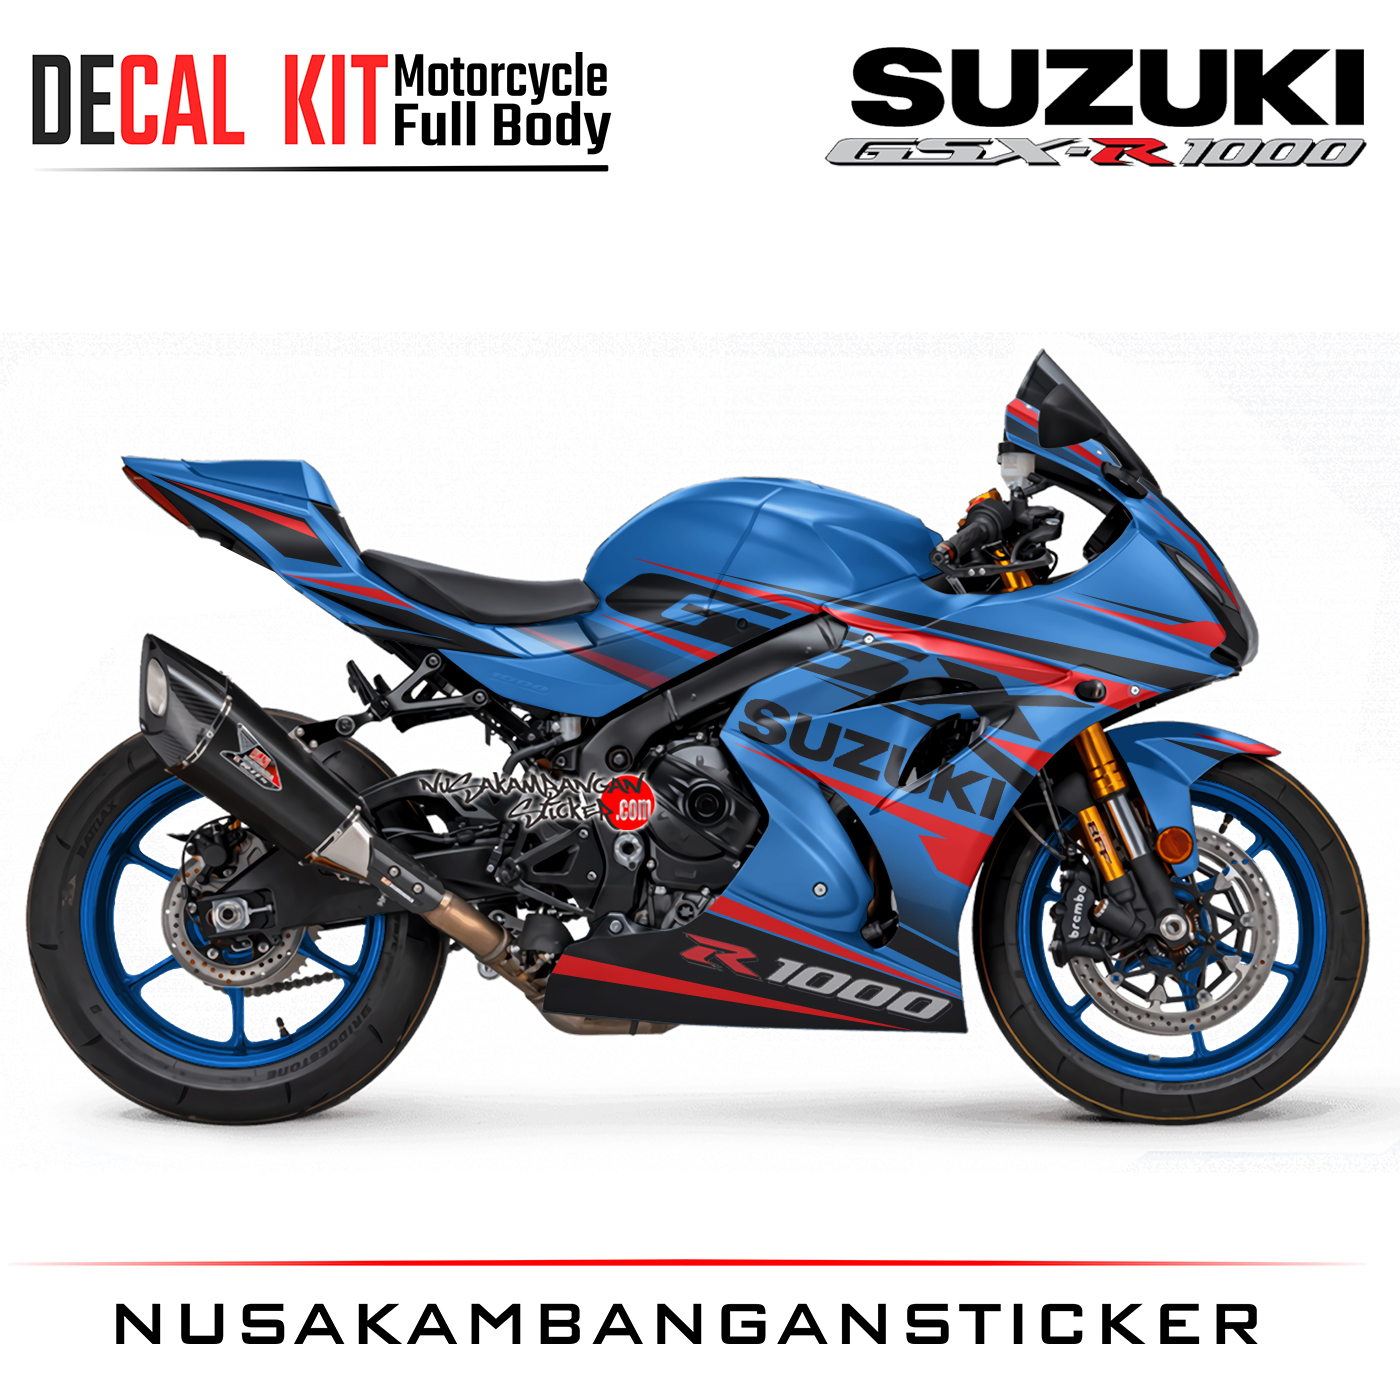 Decal Kit Sticker Suzuki GSX-R 1000 Blue Racing Big Bike Decal Modification  – Nusakambangan Sticker